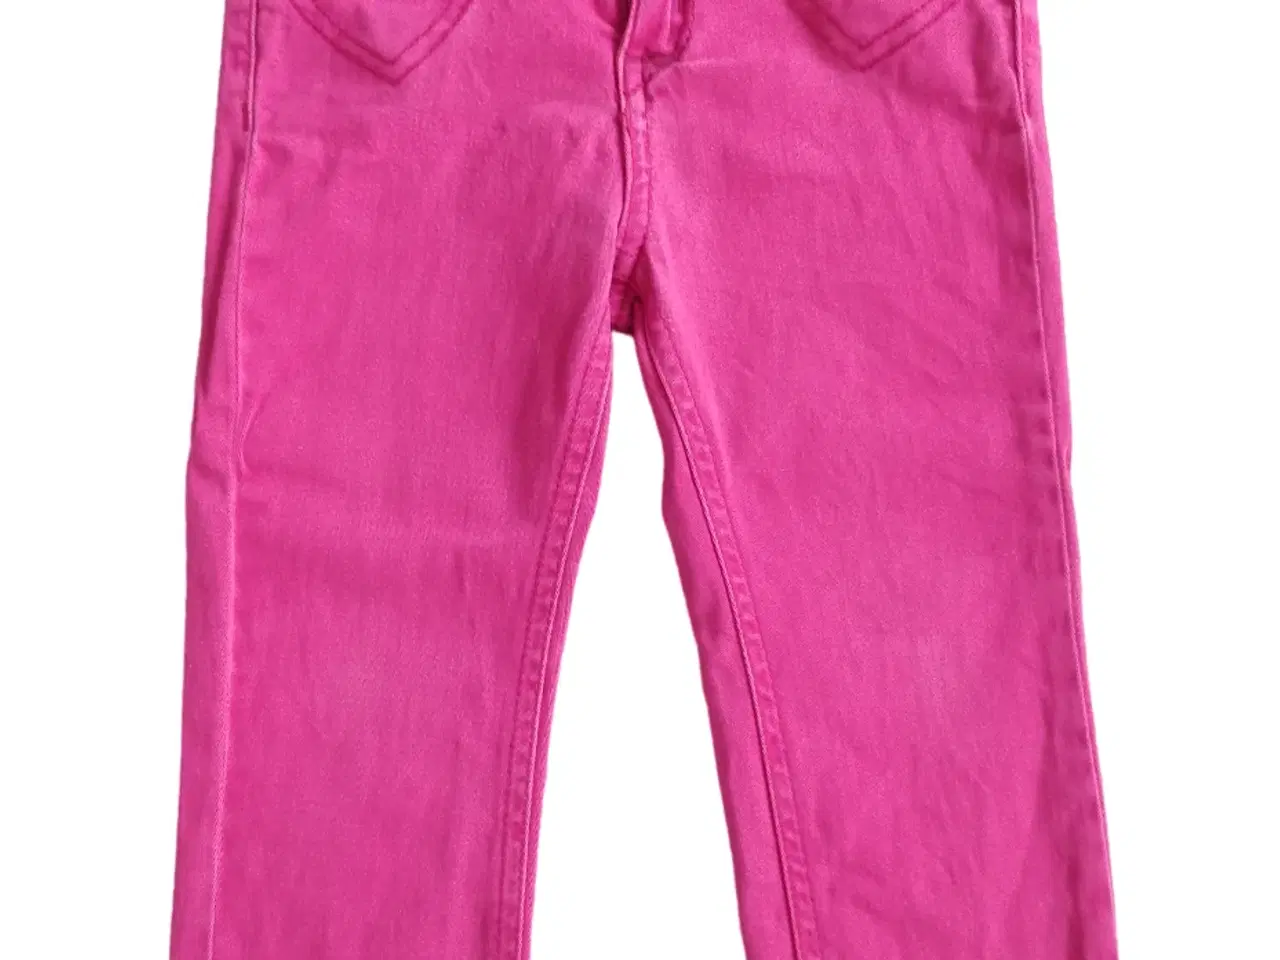 Billede 2 - Pink Hello Kitty jeans bukser, str. 92